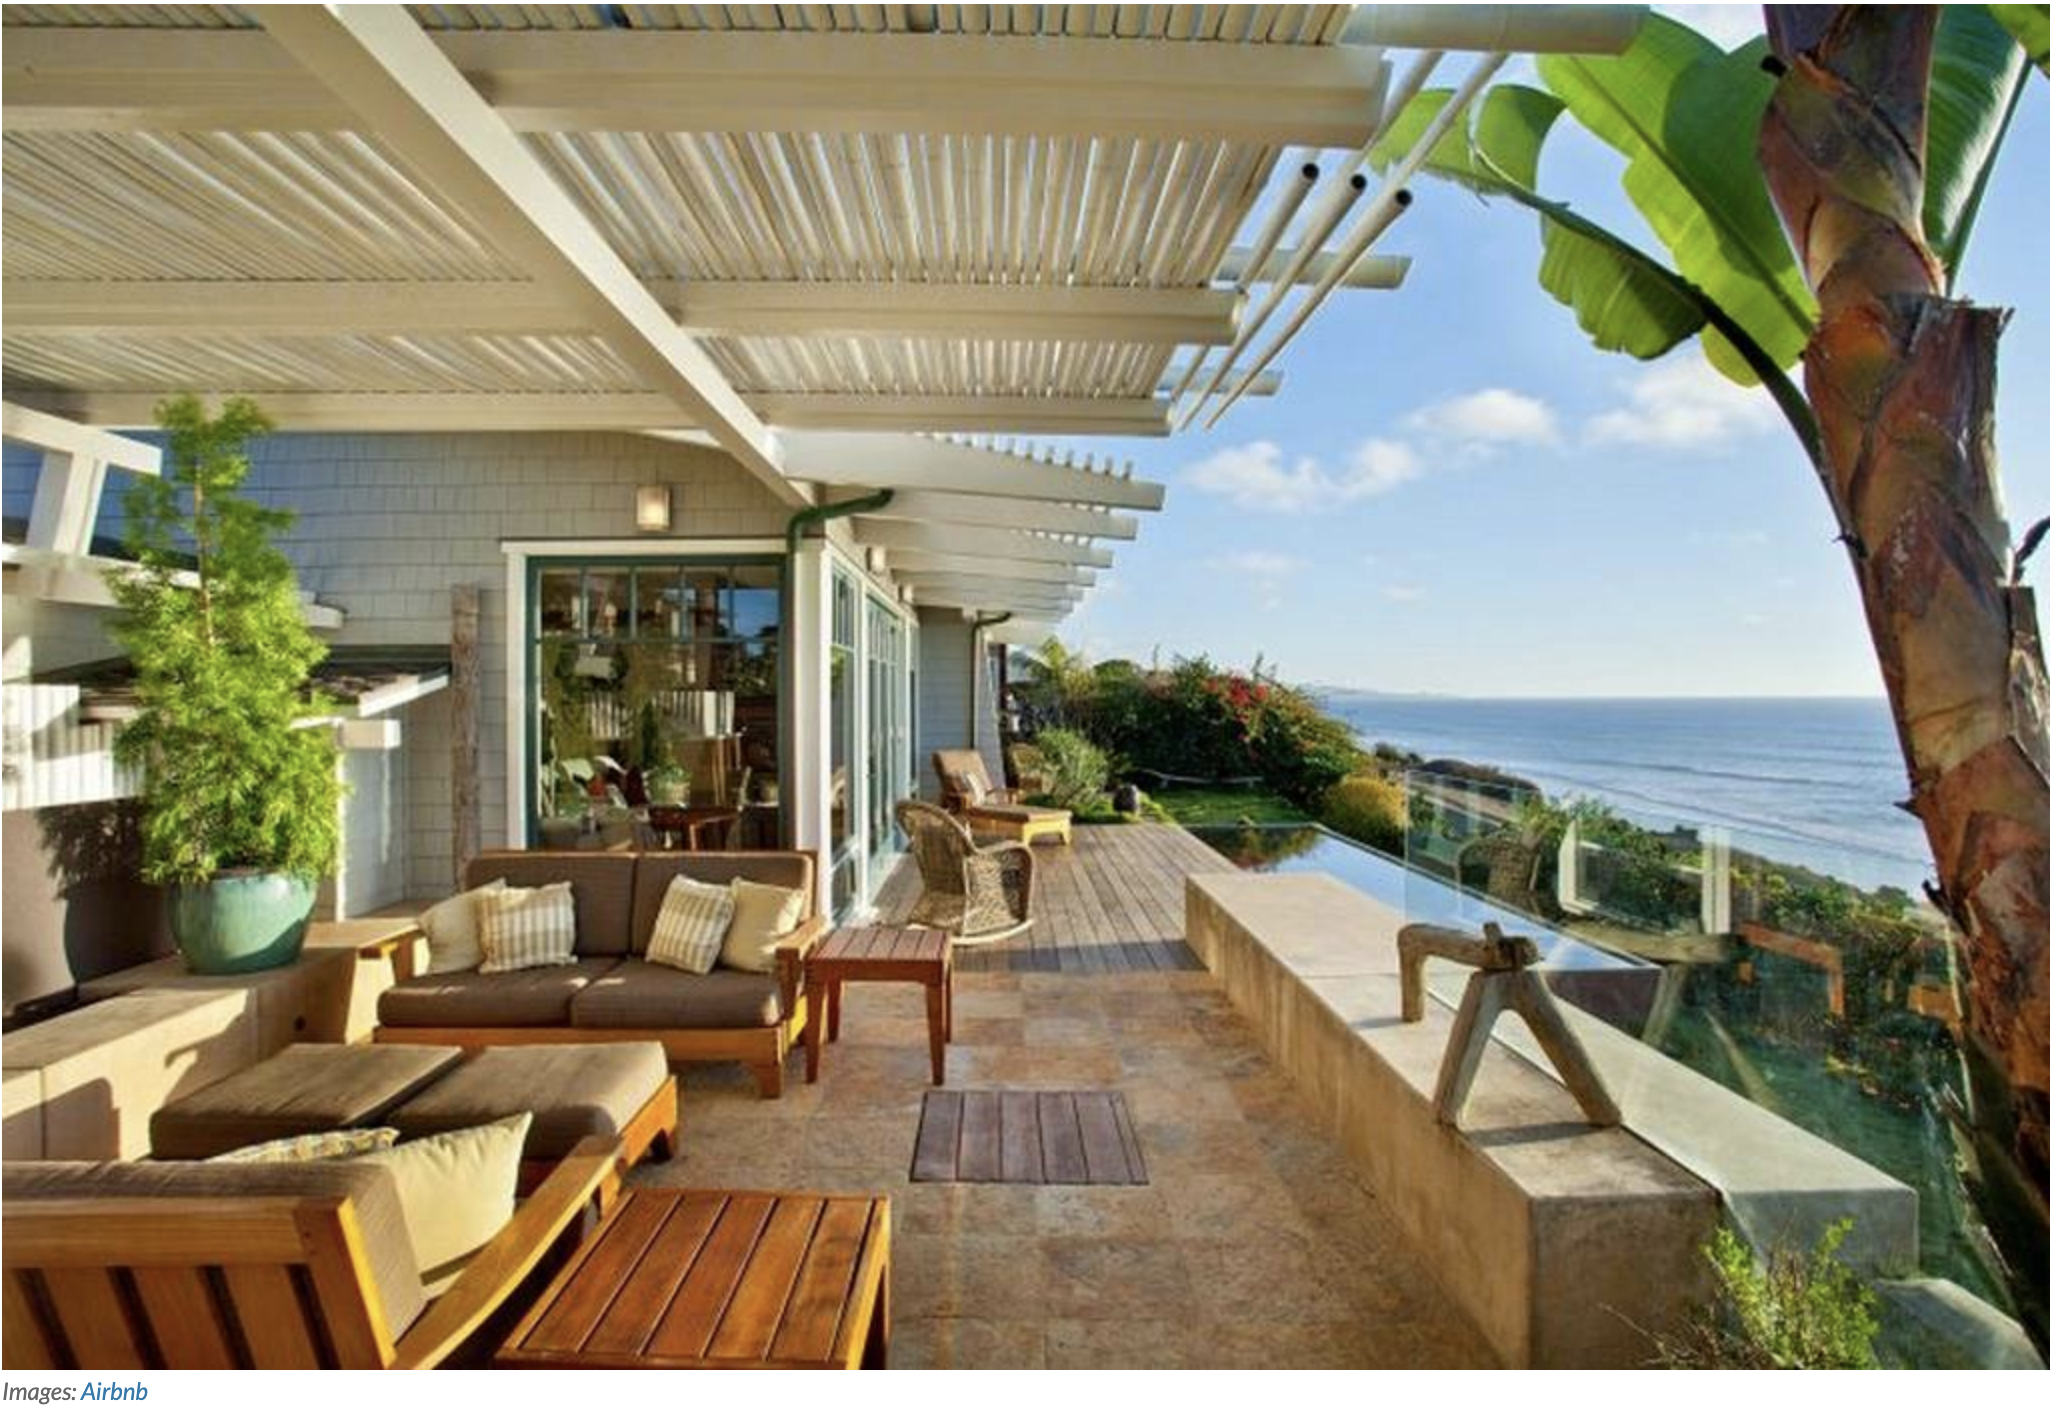 Luxury Airbnb San Diego